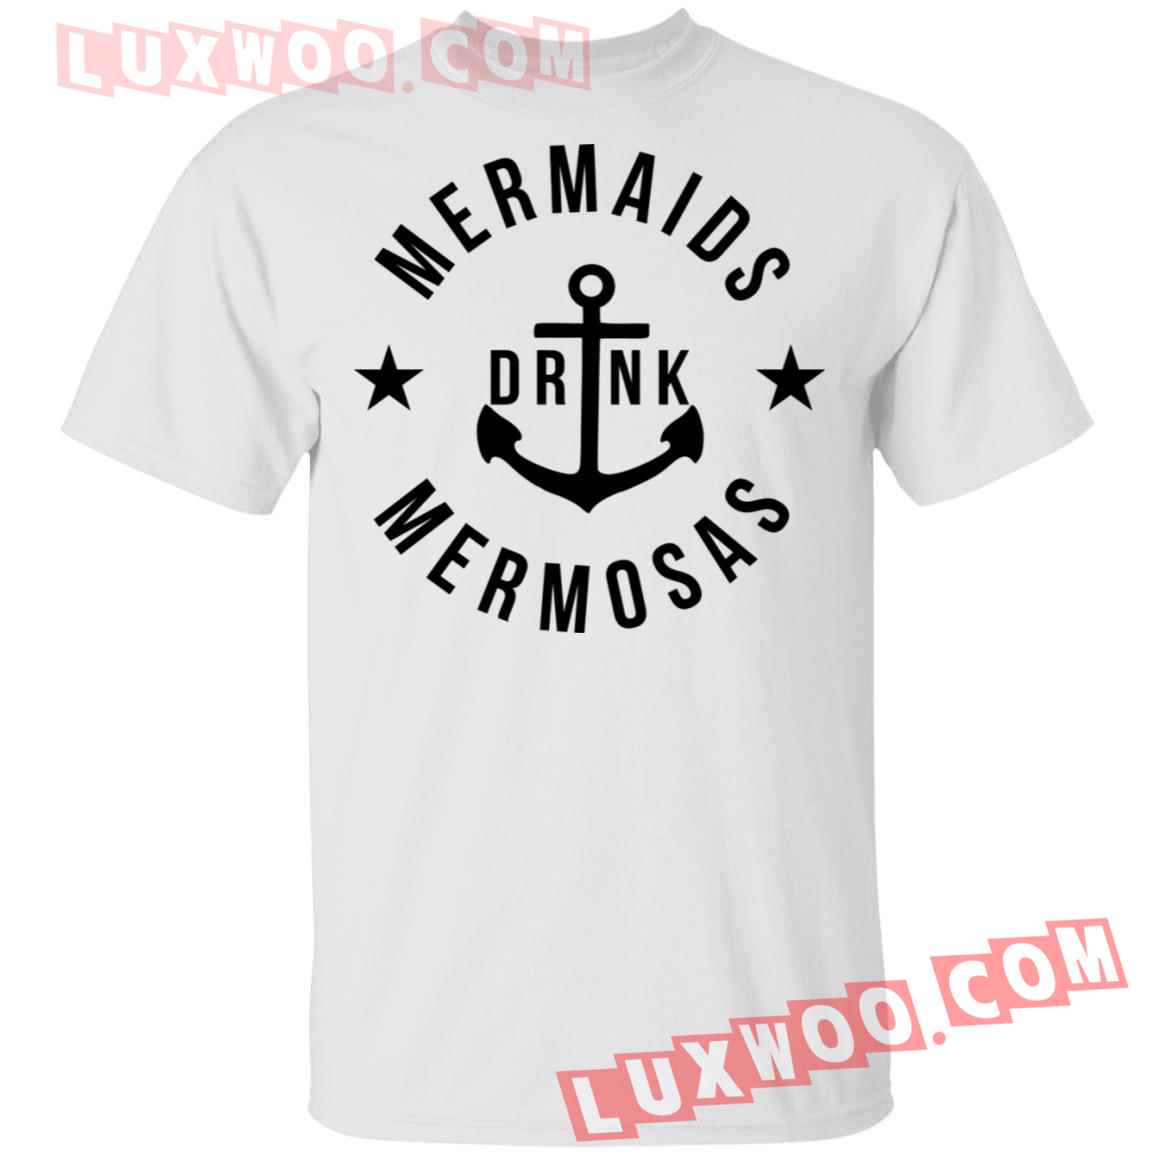 Mermaids Drink Memosas Shirt